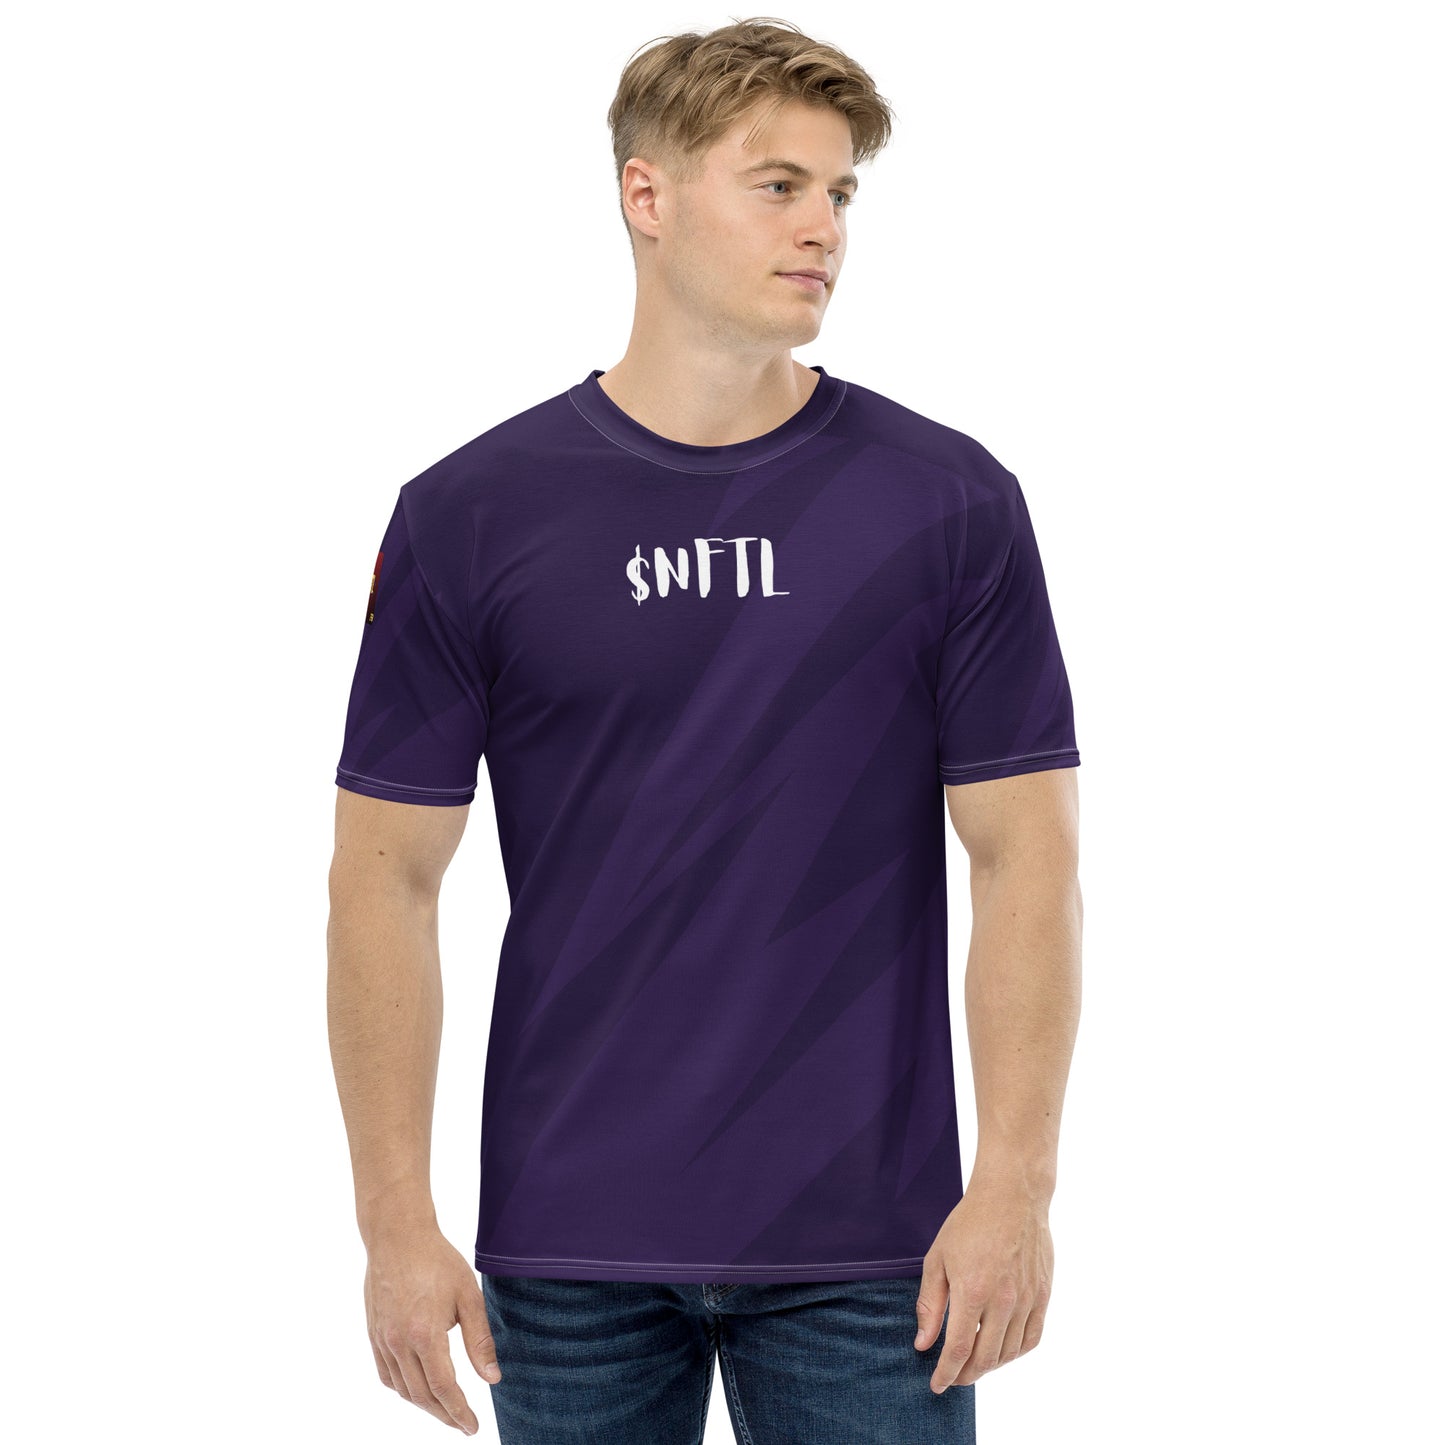 $NFTL Men's t-shirt Limited Edition #7